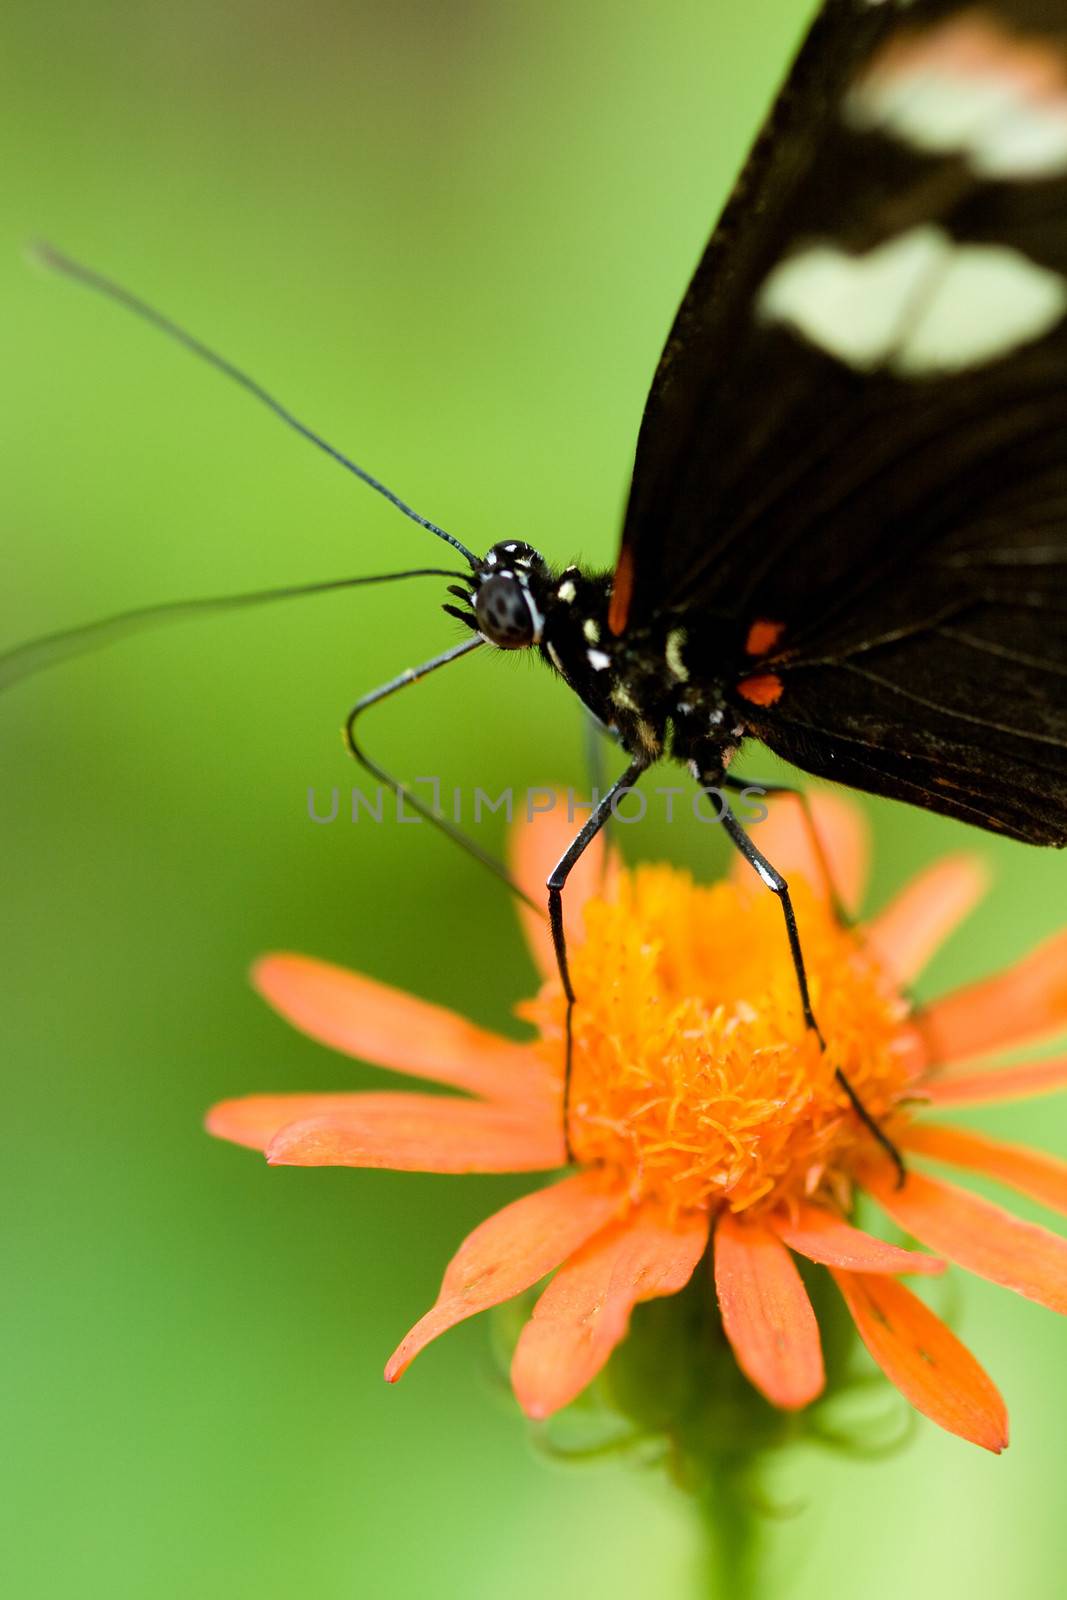 Butterfly on flower by CelsoDiniz